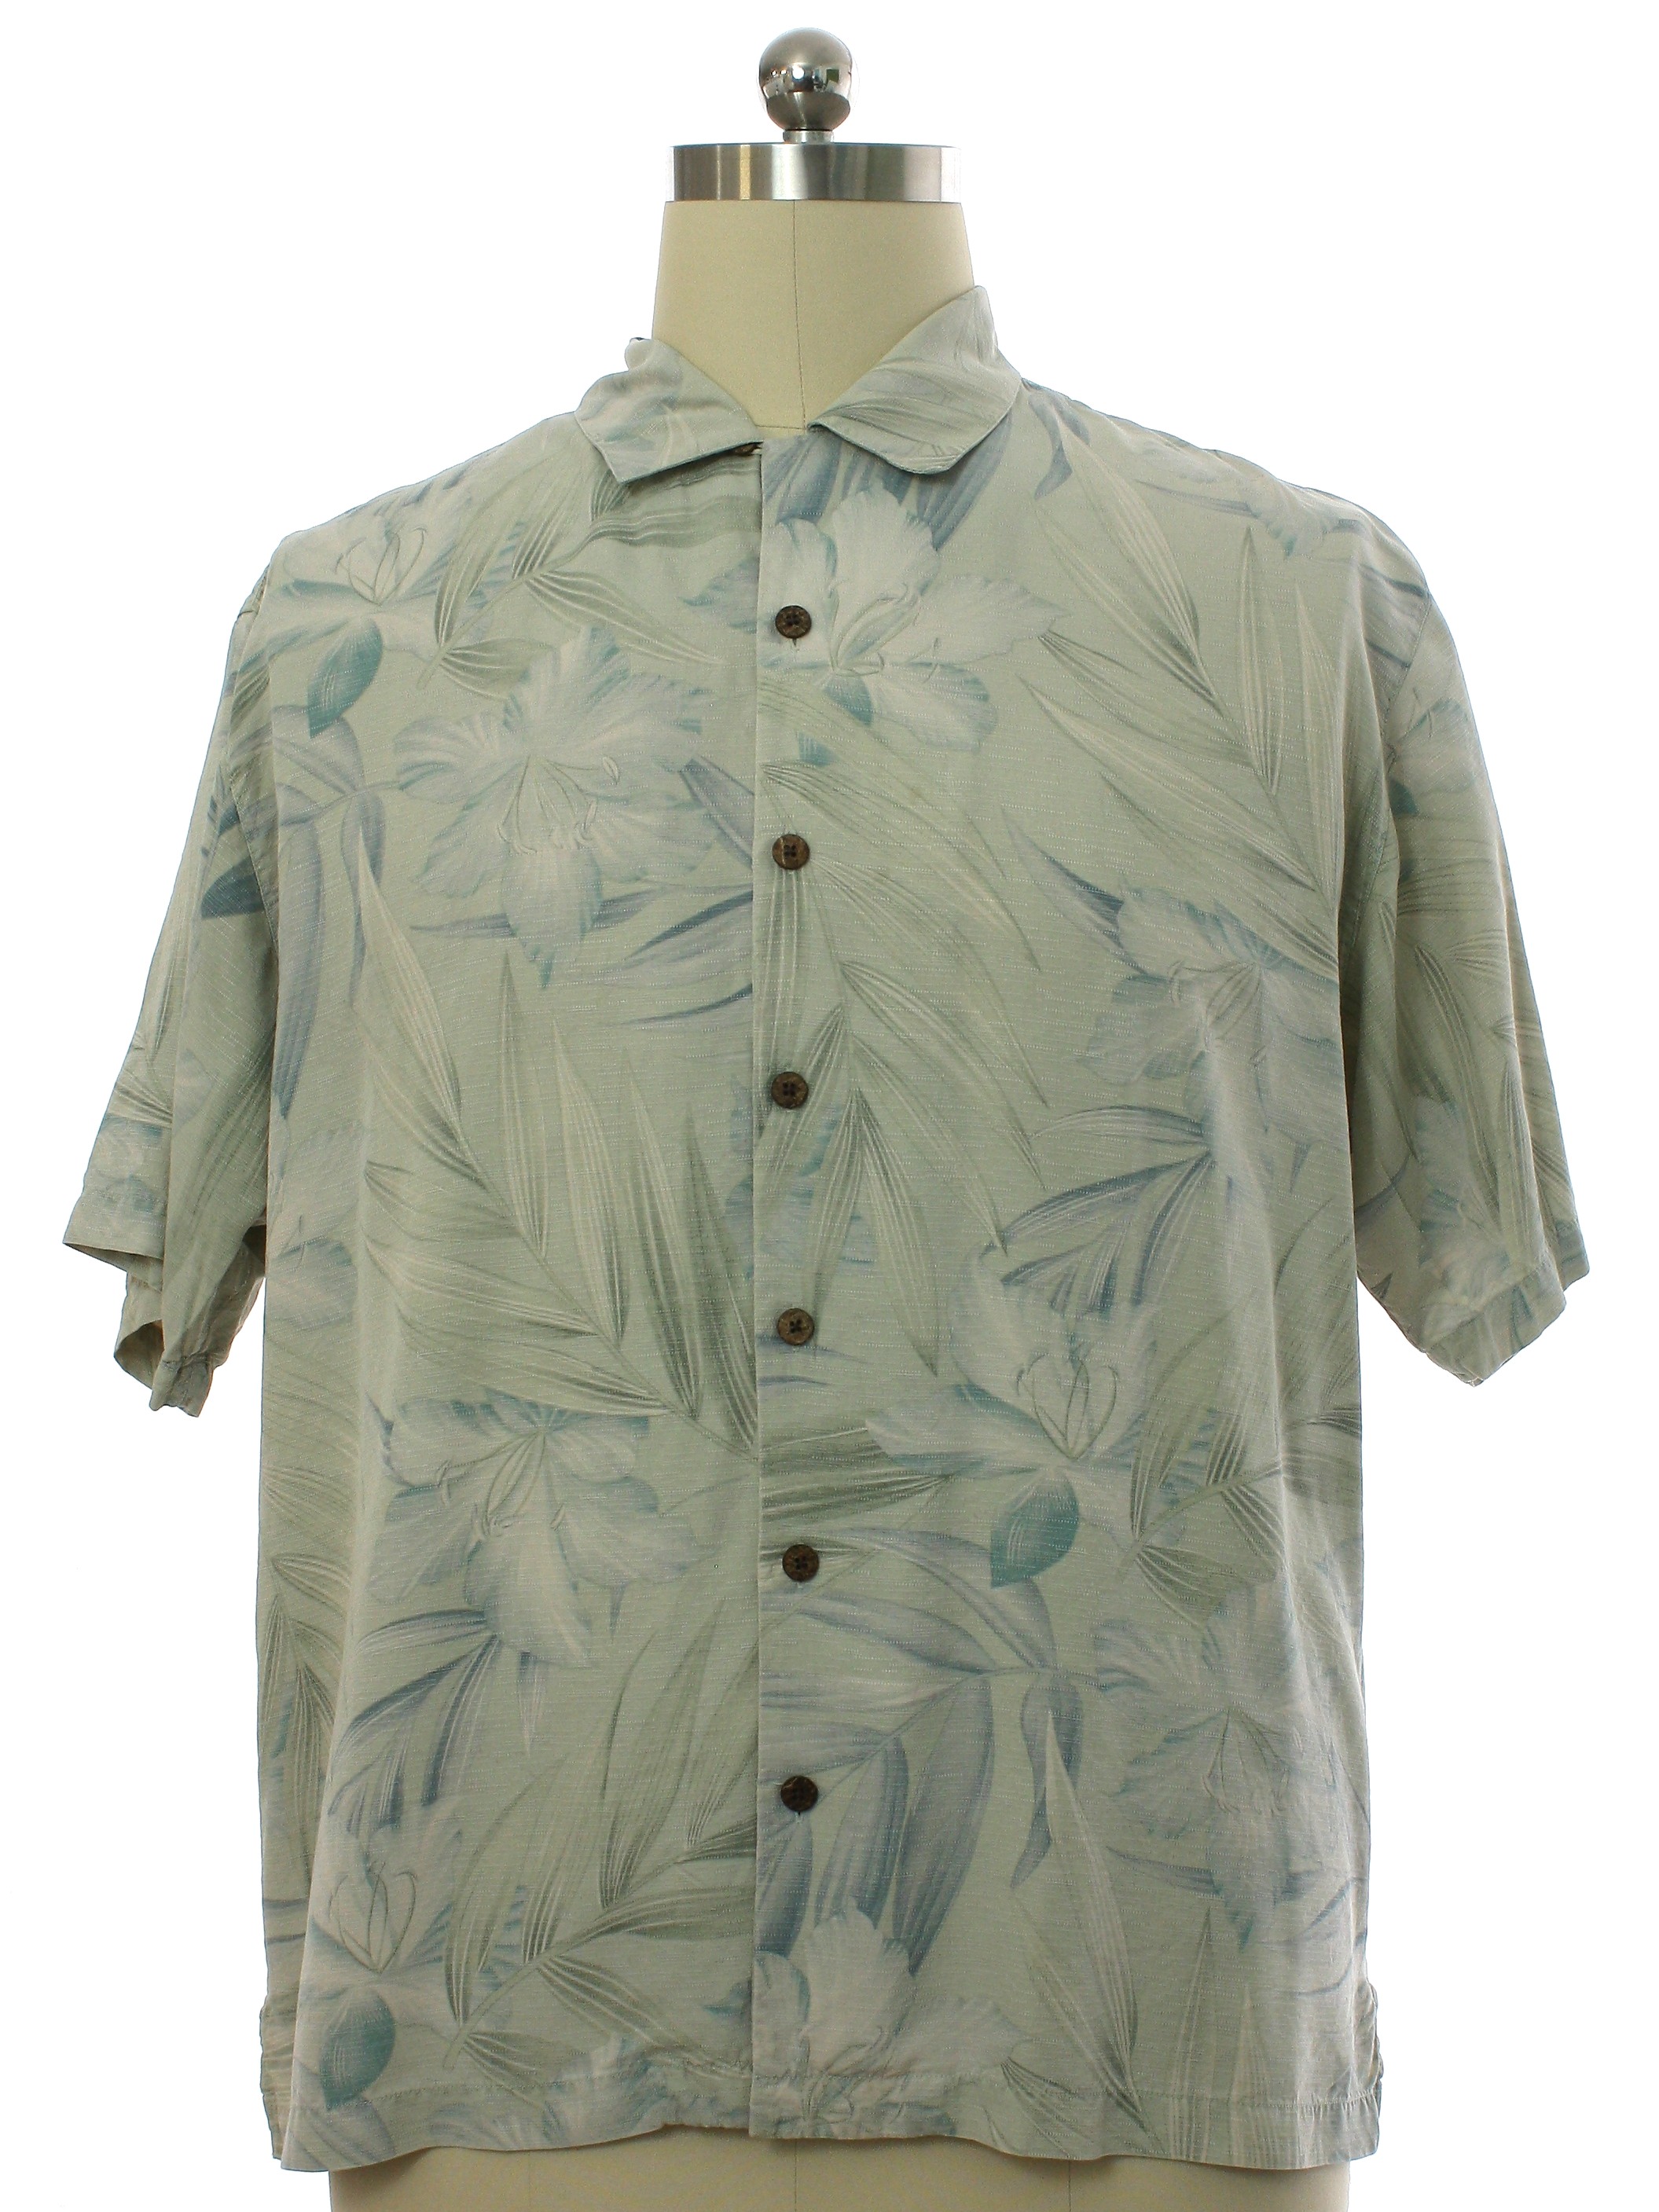 Tommy Bahama - Silk Shirt - Tropic Isles - ST325384 - BrownsMenswear.com